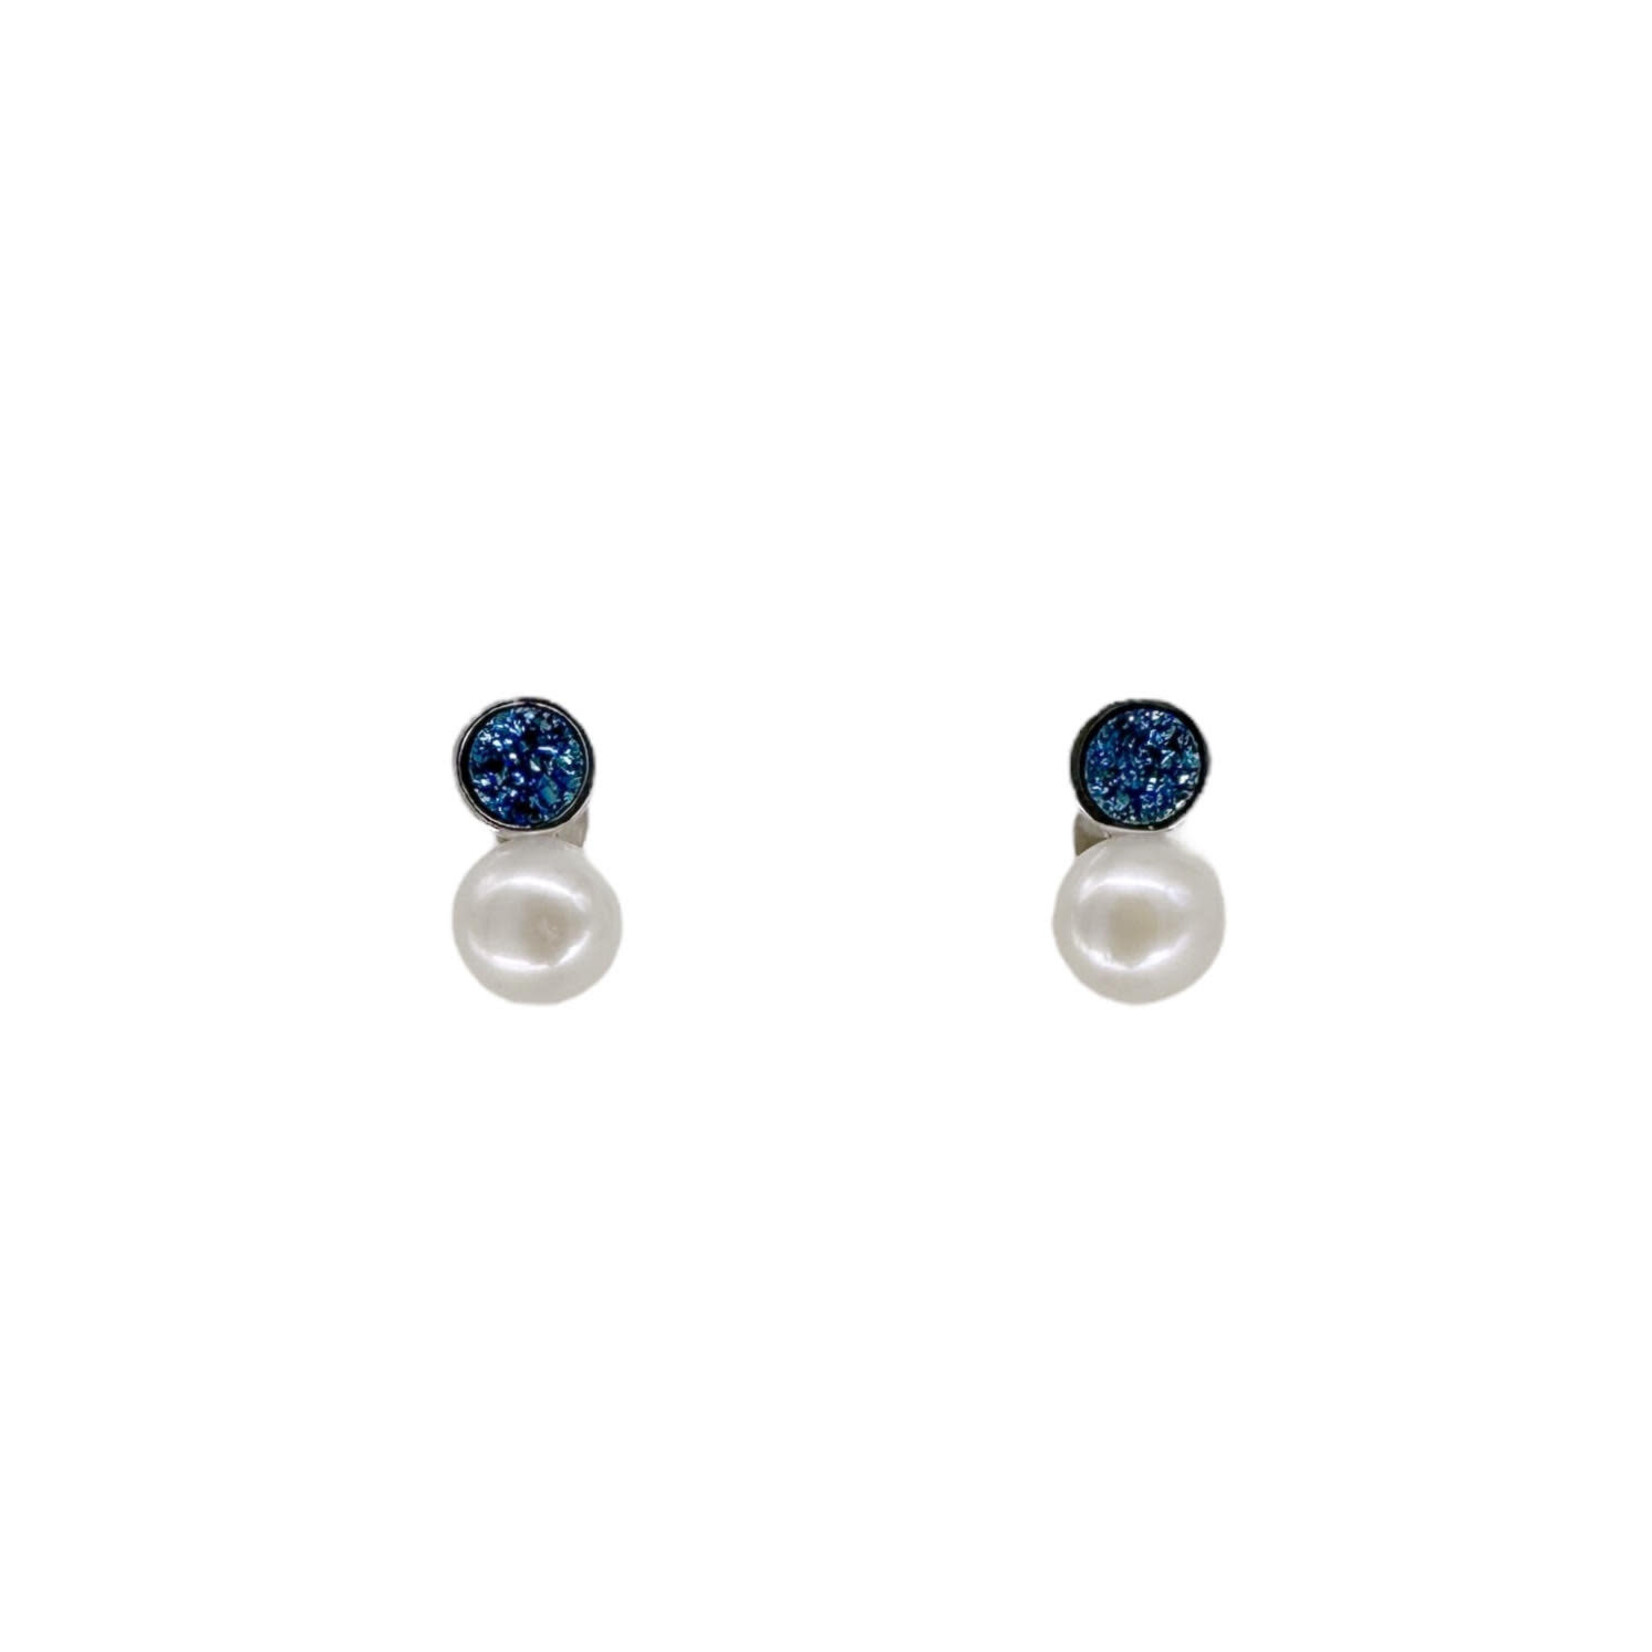 SE596 Sterling Silver Blue CZ White Freshwater Pearl Dangle Earrings